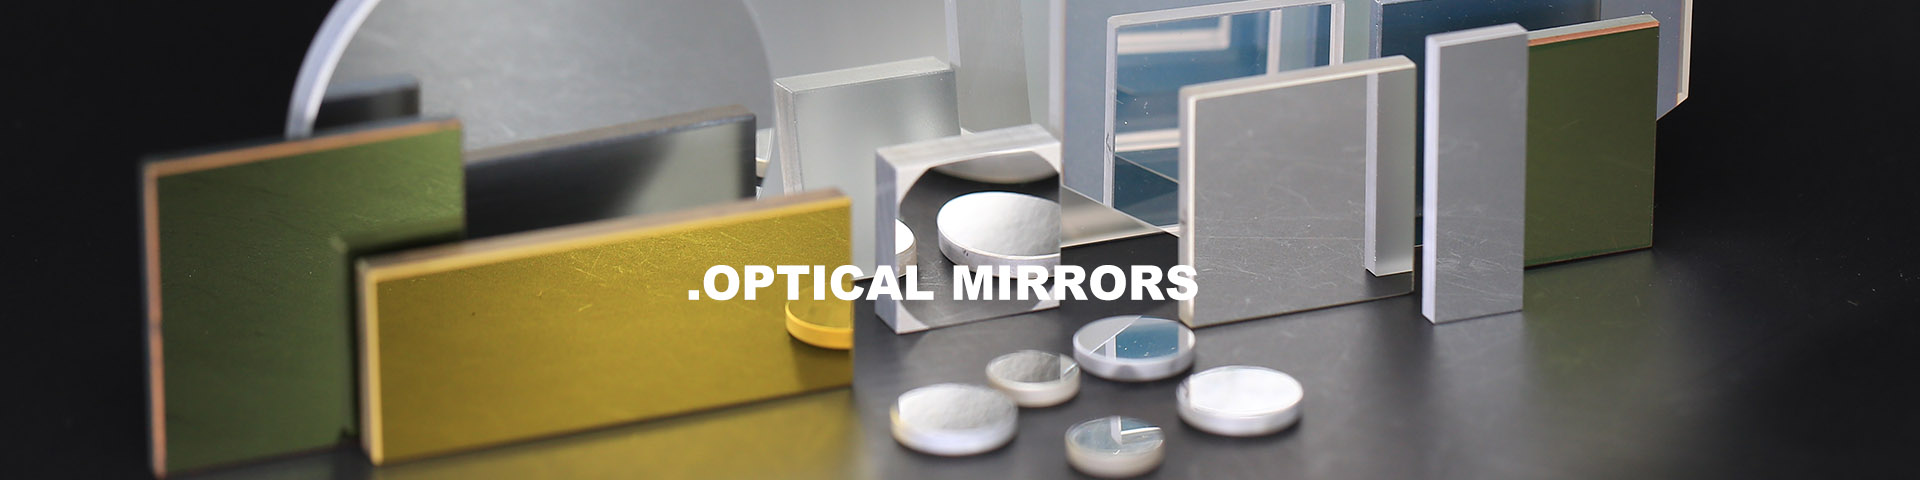 Optical Mirrors